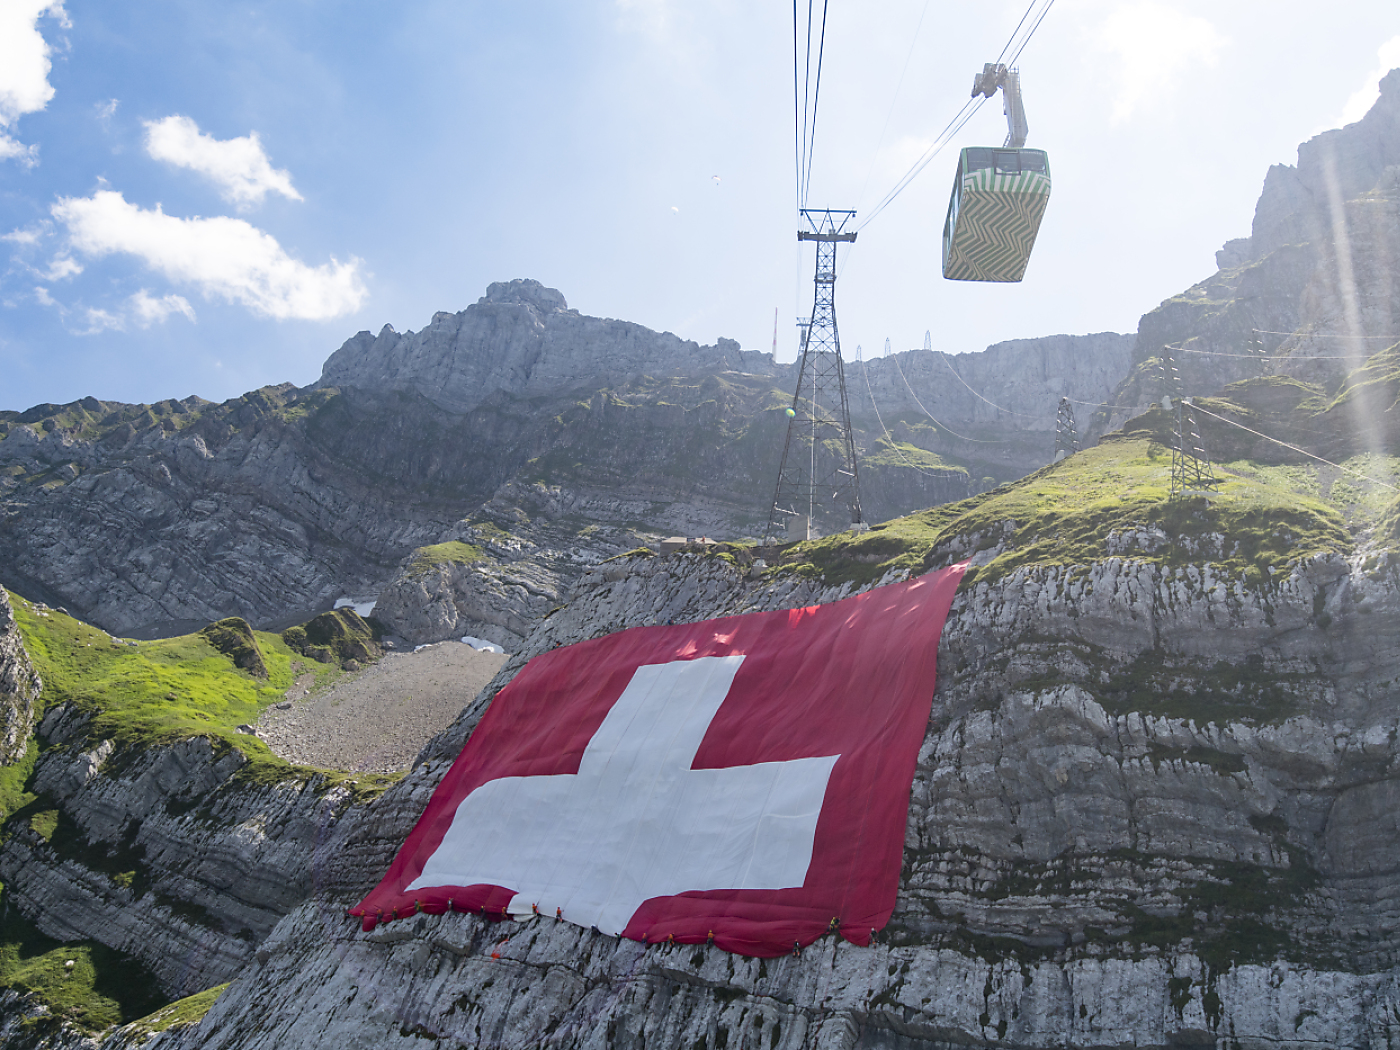 Aug. 1: Biggest Swiss flag returns to the Säntis